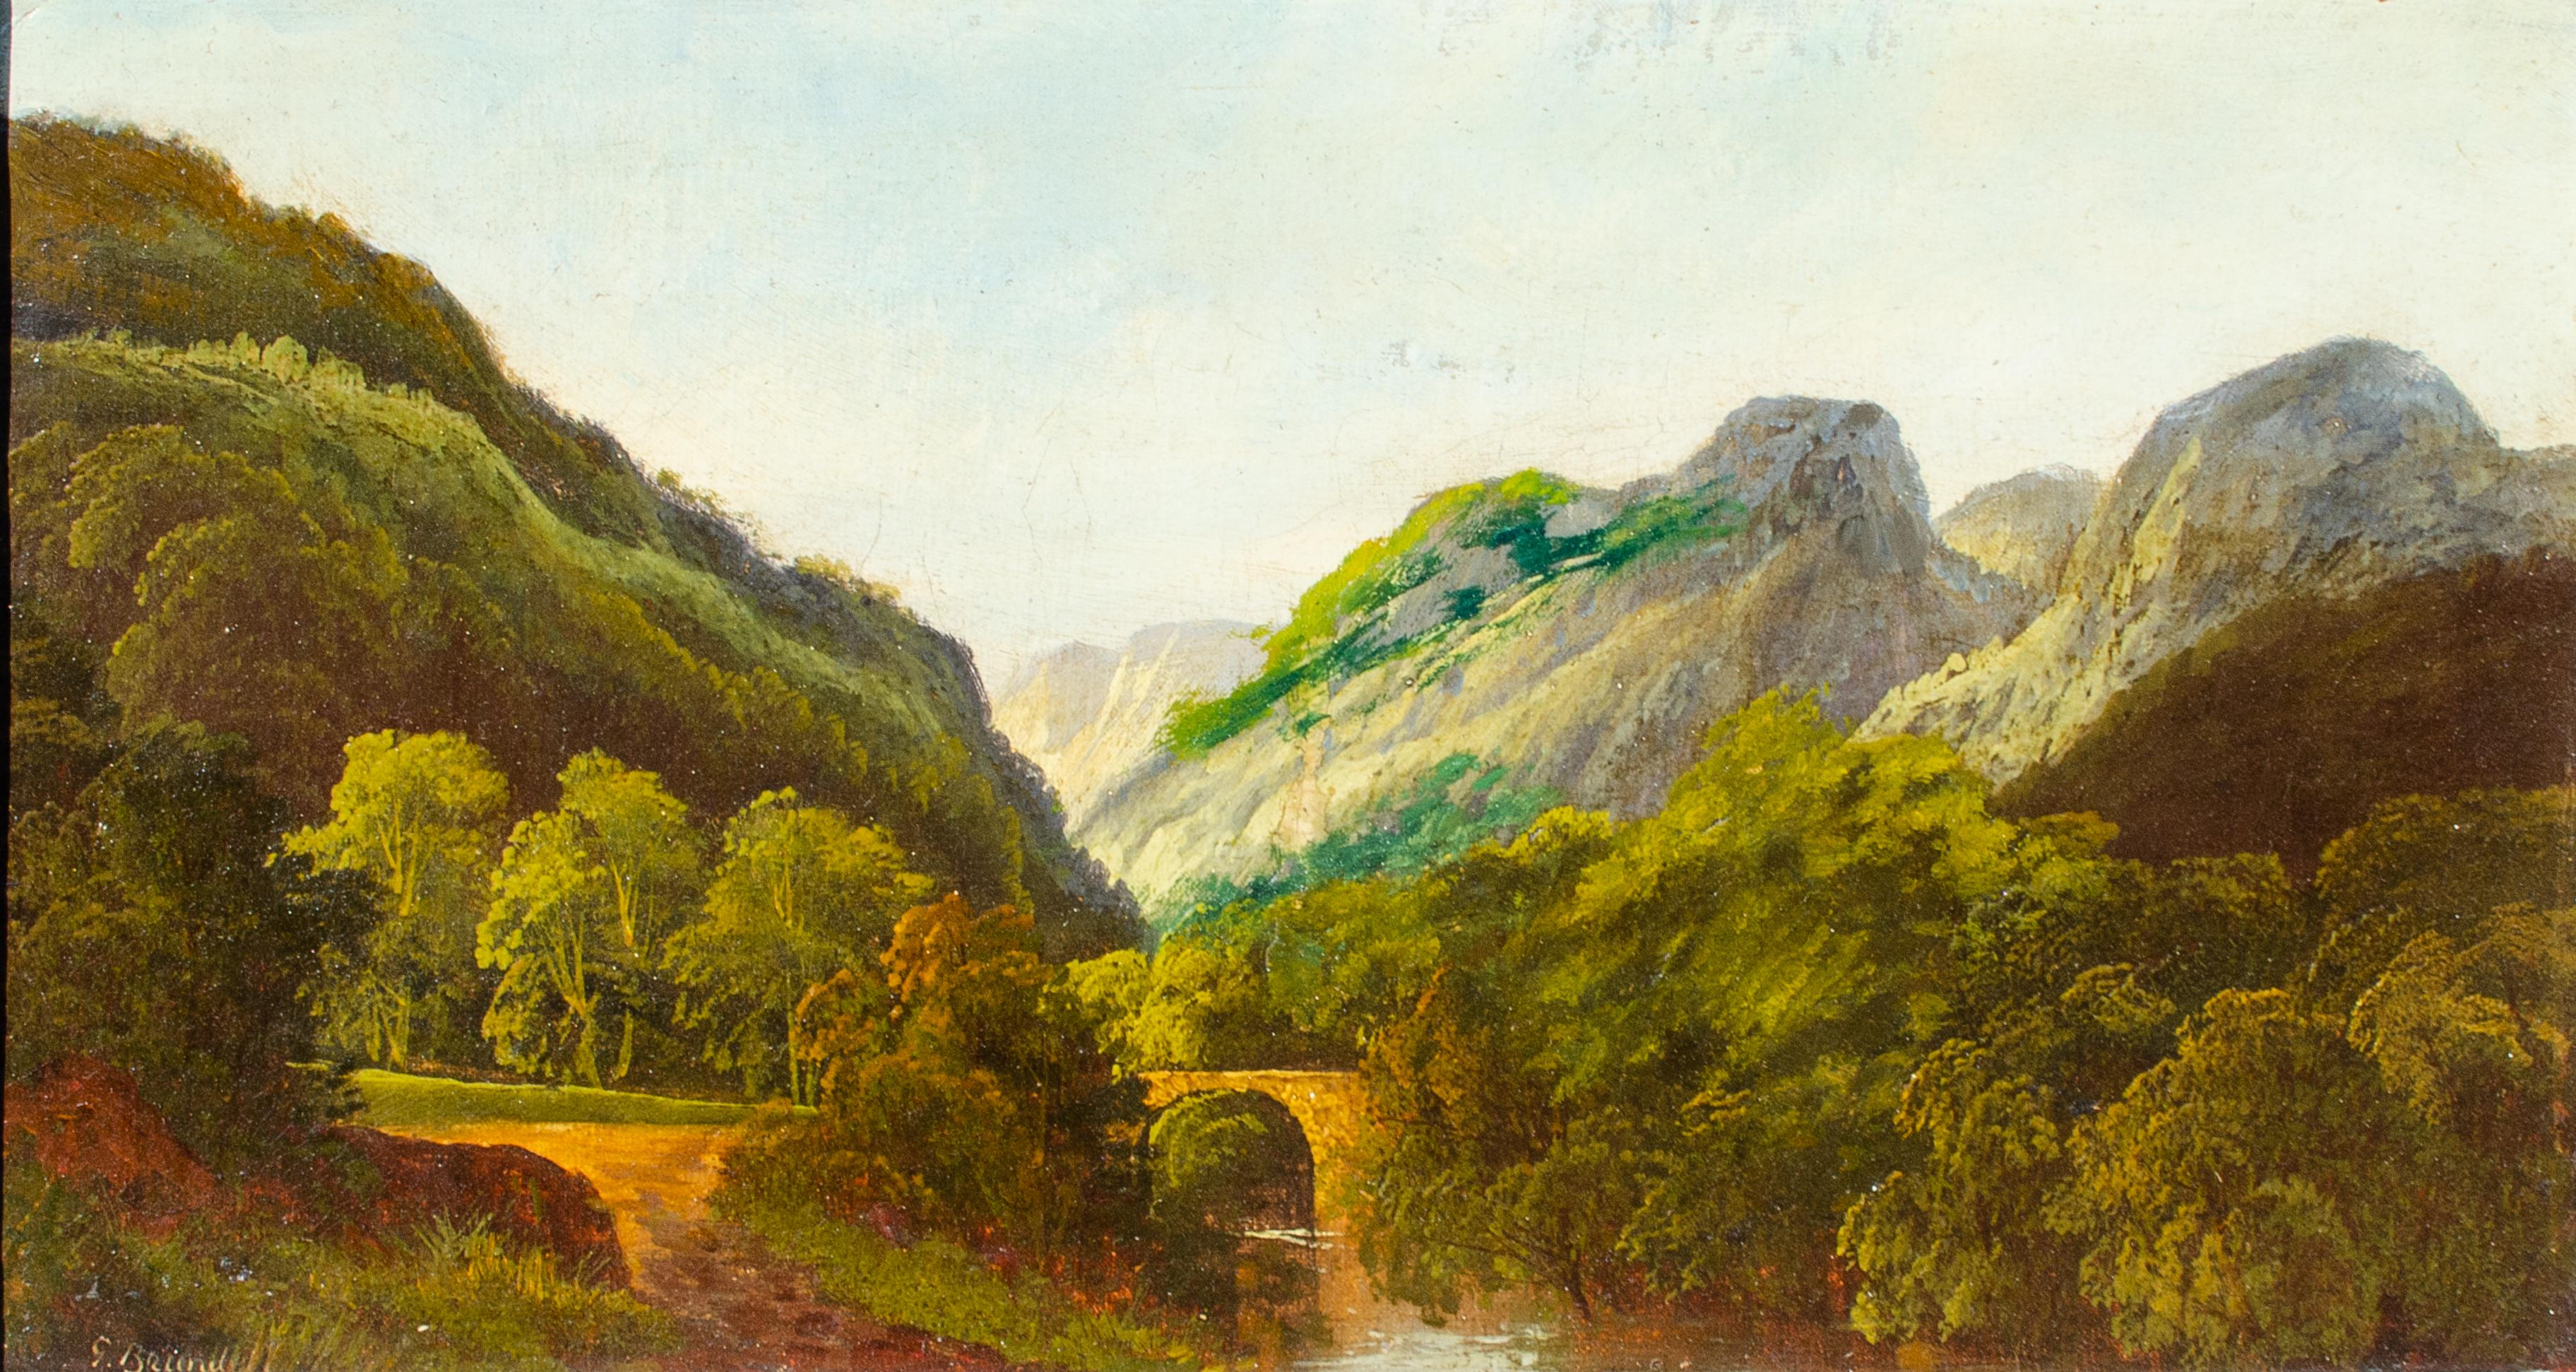 Unknown Landscape Painting – Gemälde im Stil der Hudson River School, signiert Brundell